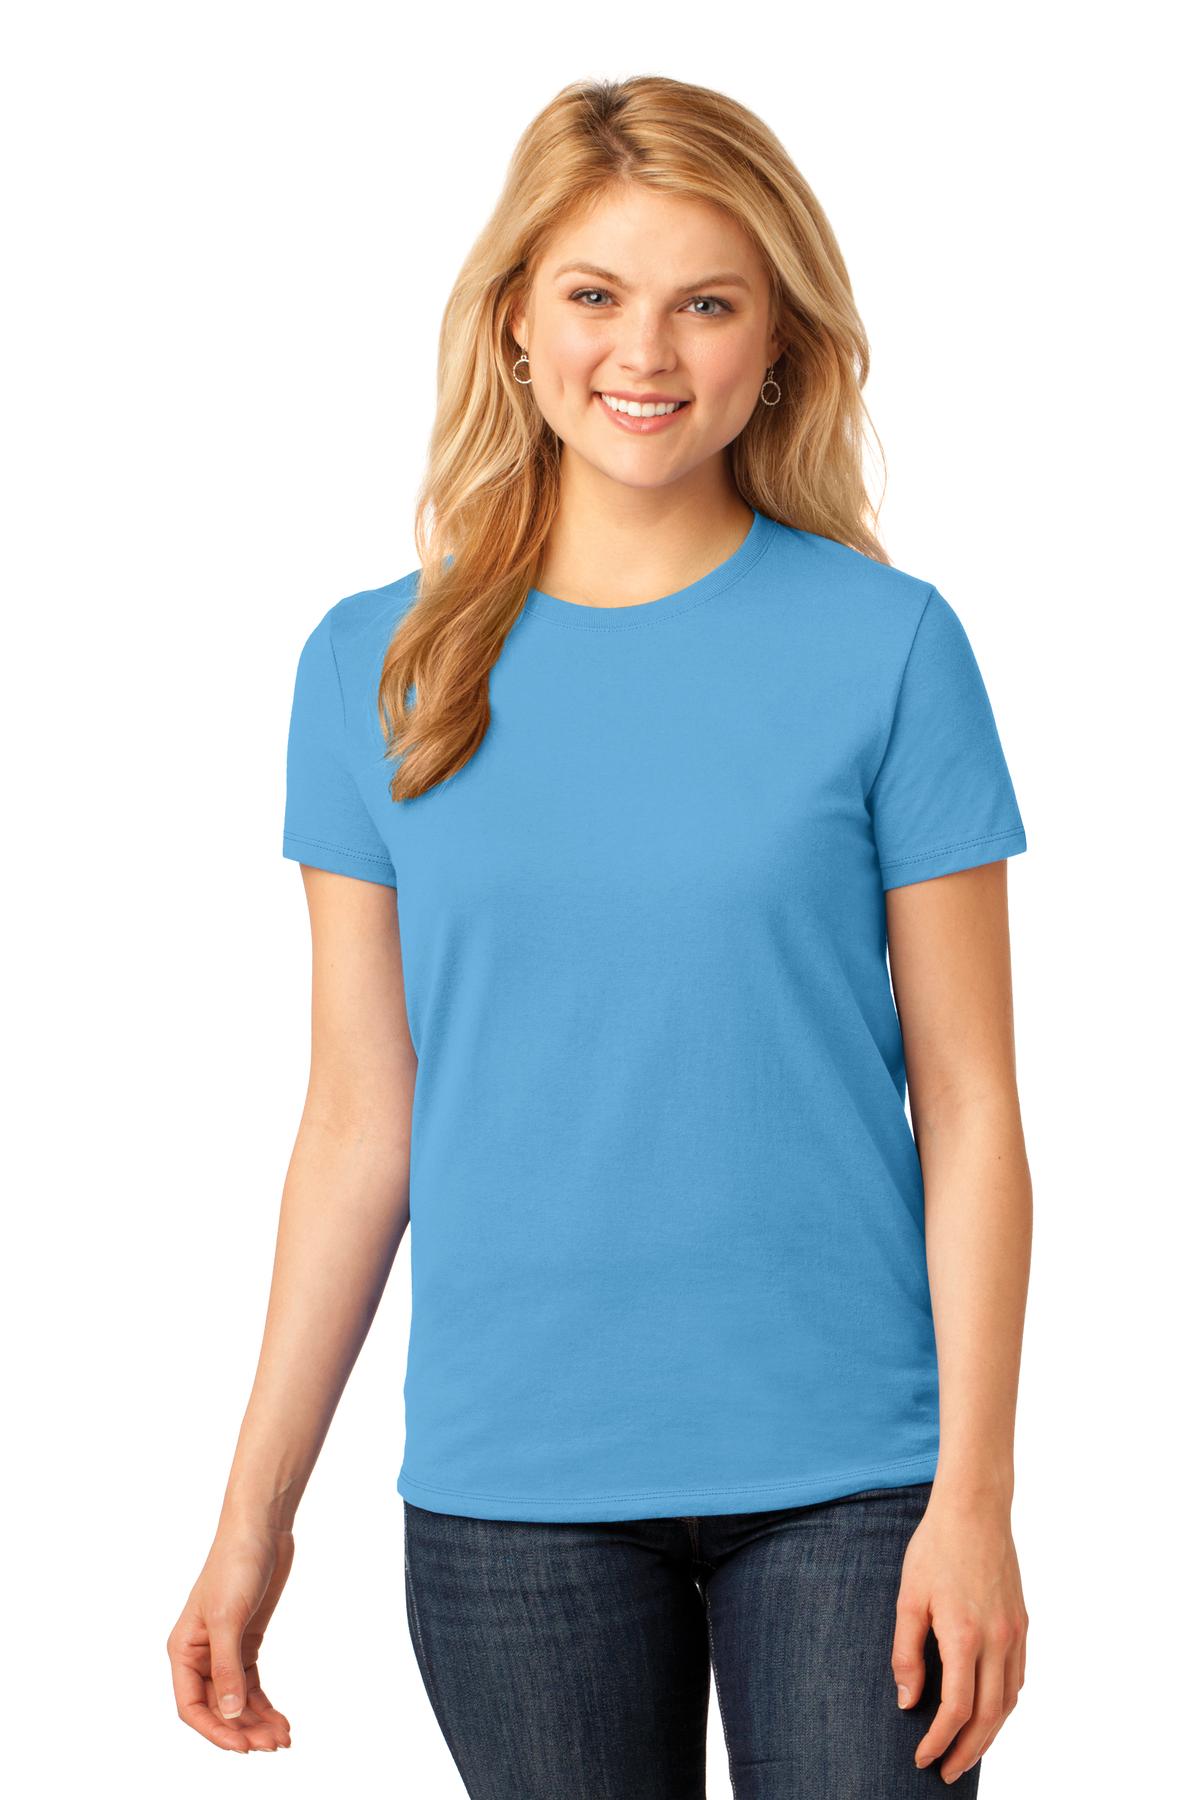 https://images.shirtspace.com/fullsize/UeNu1luJqxjymiessxcfJg%3D%3D/75331/10173-port-company-lpc54-ladies-core-cotton-tee-front-aquatic-blue.jpg